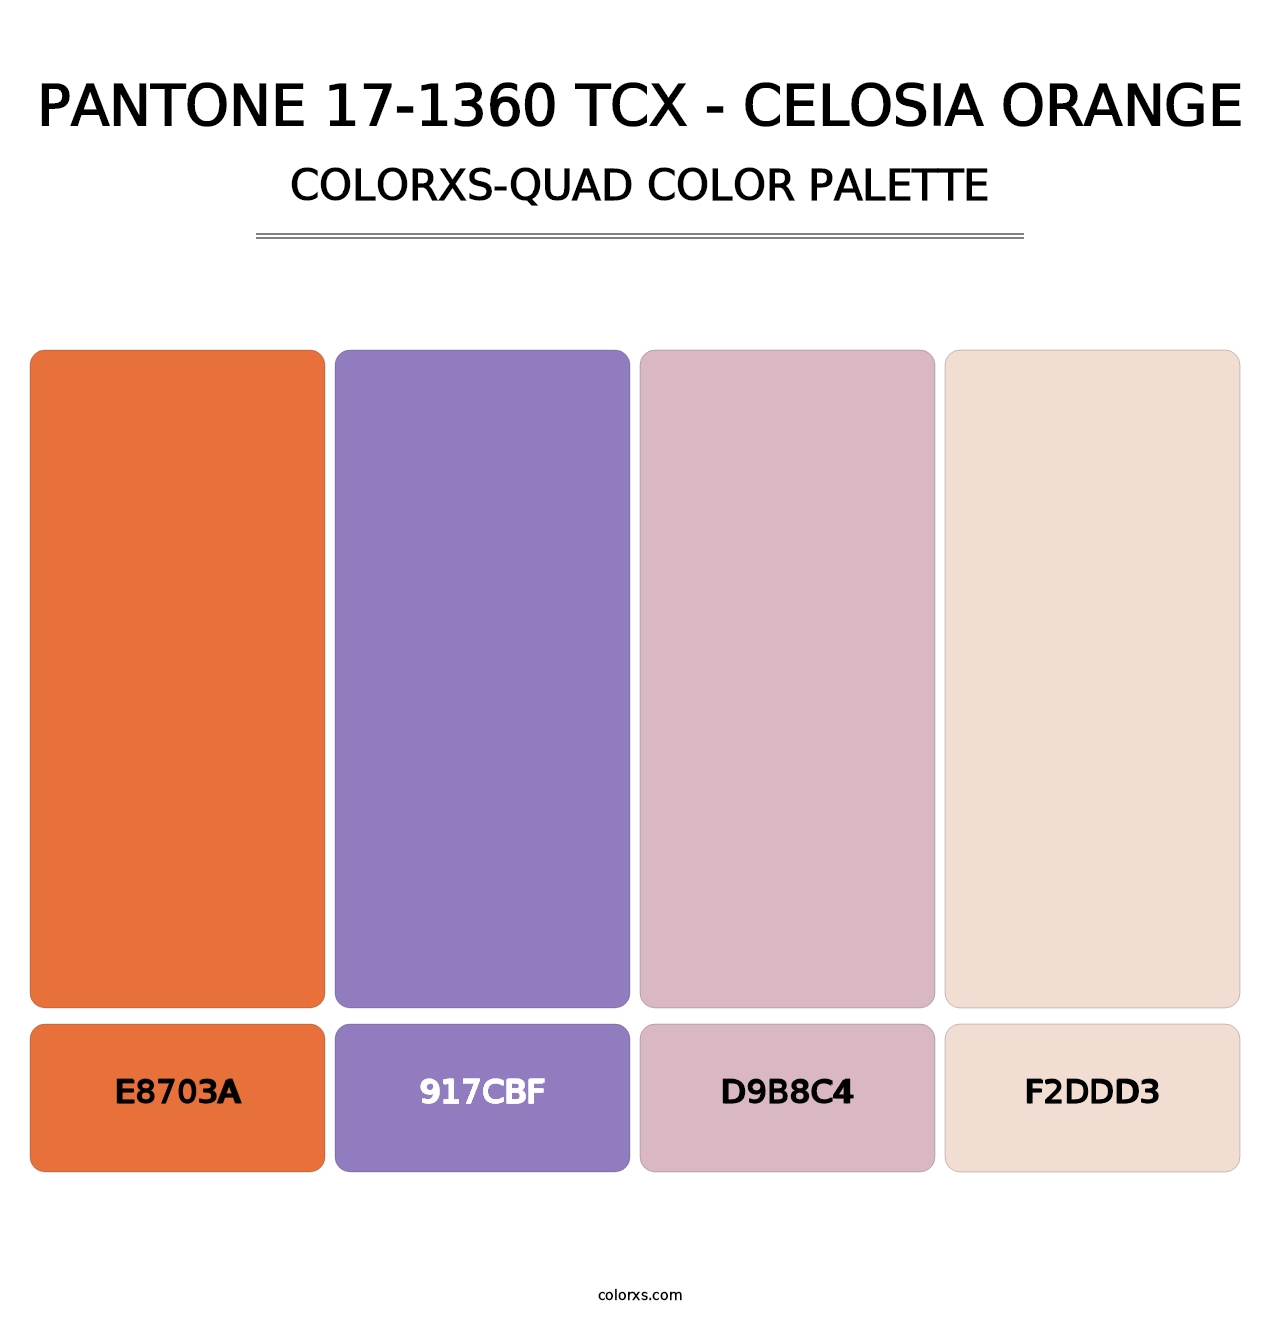 PANTONE 17-1360 TCX - Celosia Orange - Colorxs Quad Palette